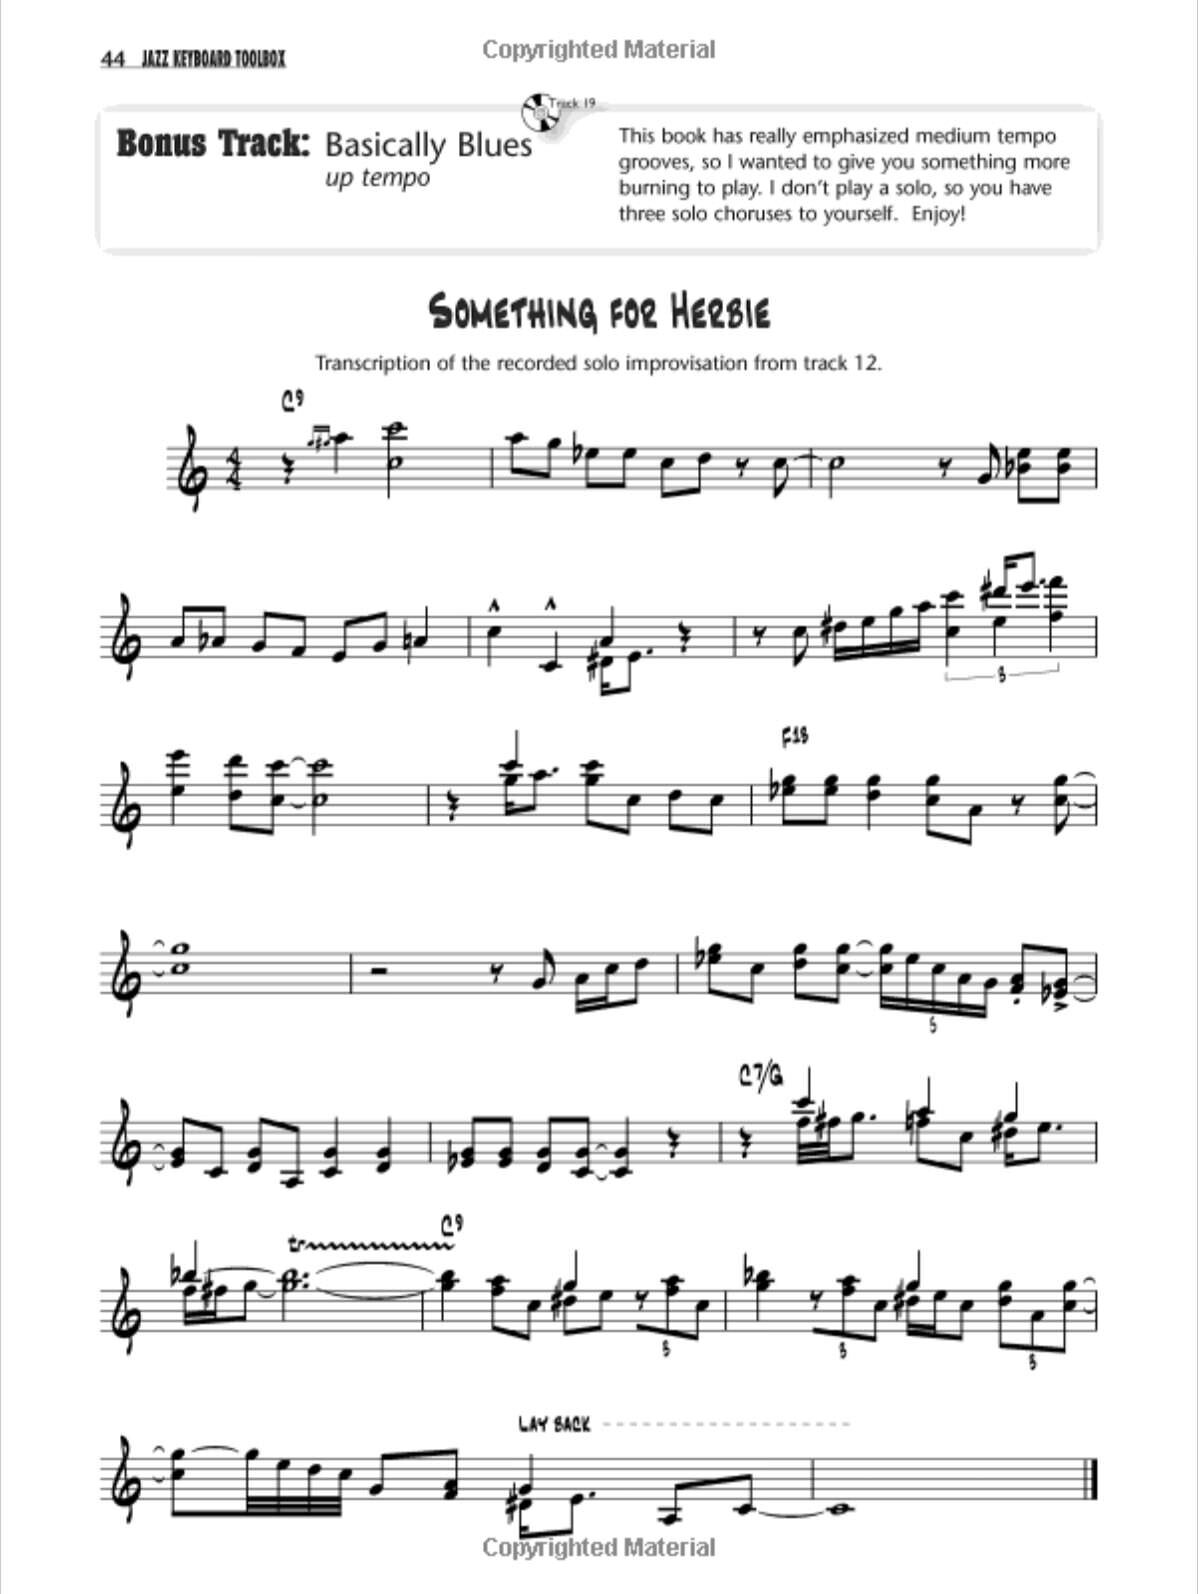 jazz-keyboard-toolbox-bill-cunliffe-2000-10.jpg